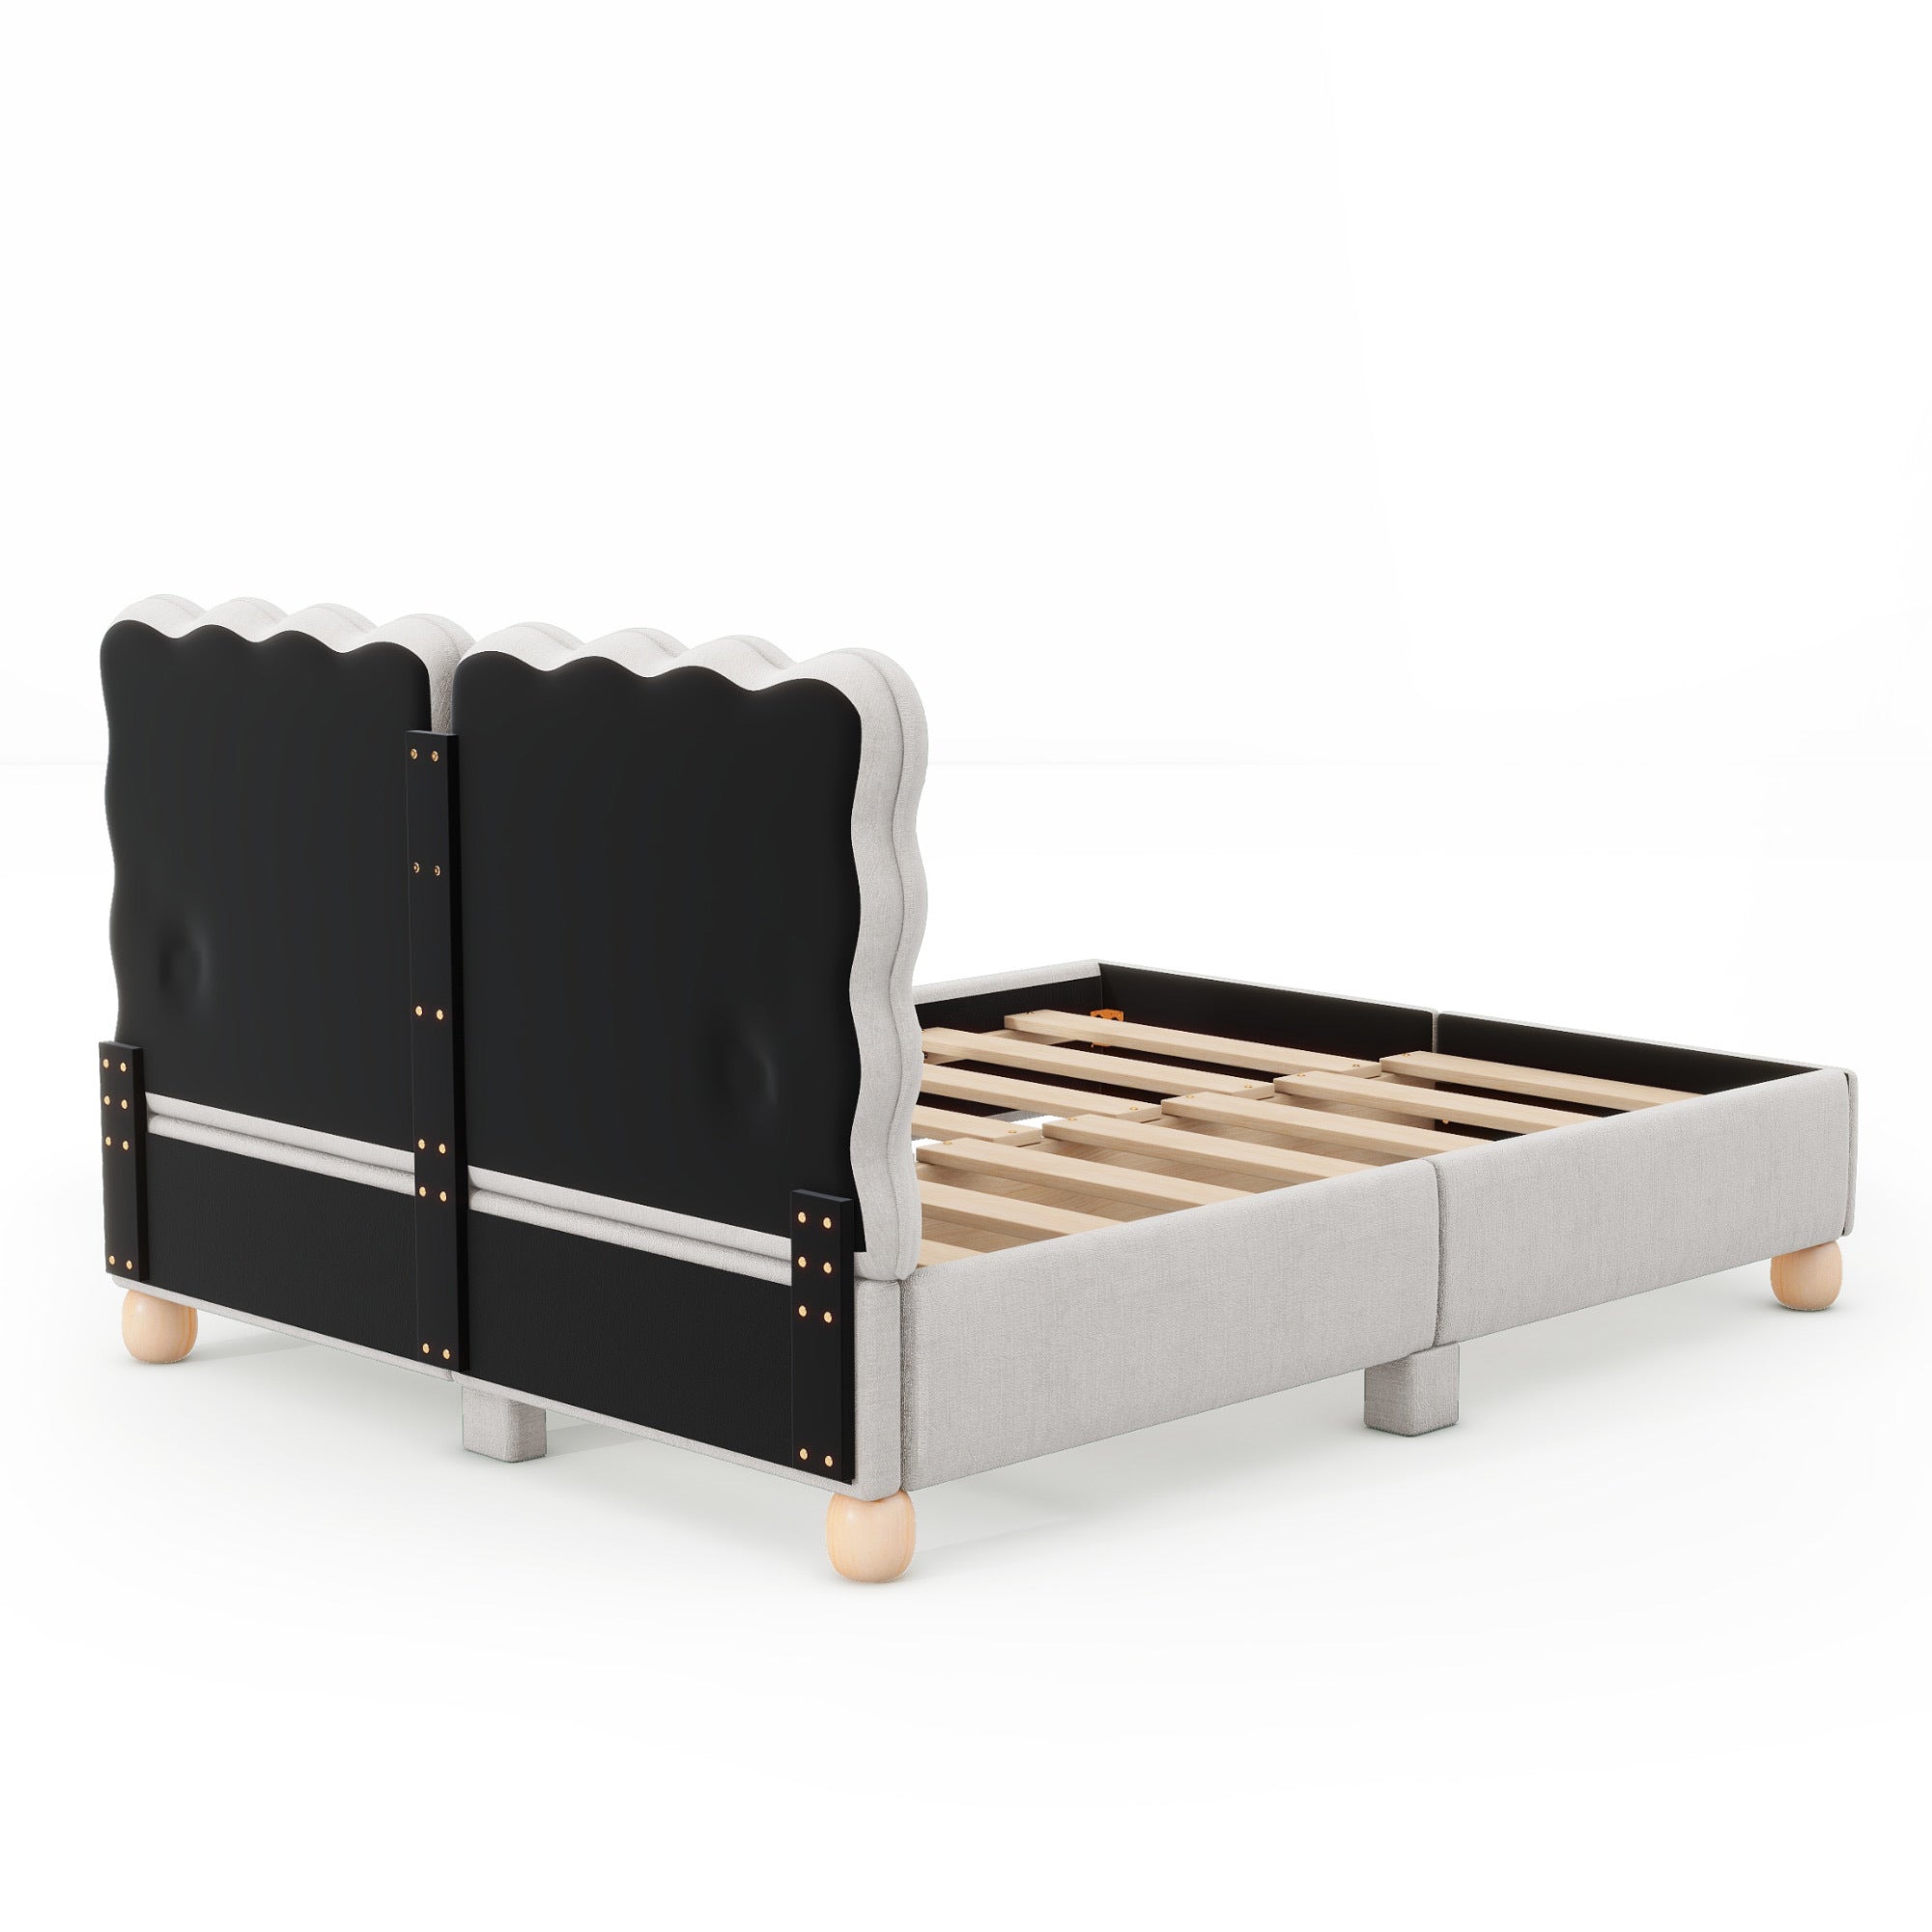 Full Size Upholstered Platform Bed with Support beige-upholstered